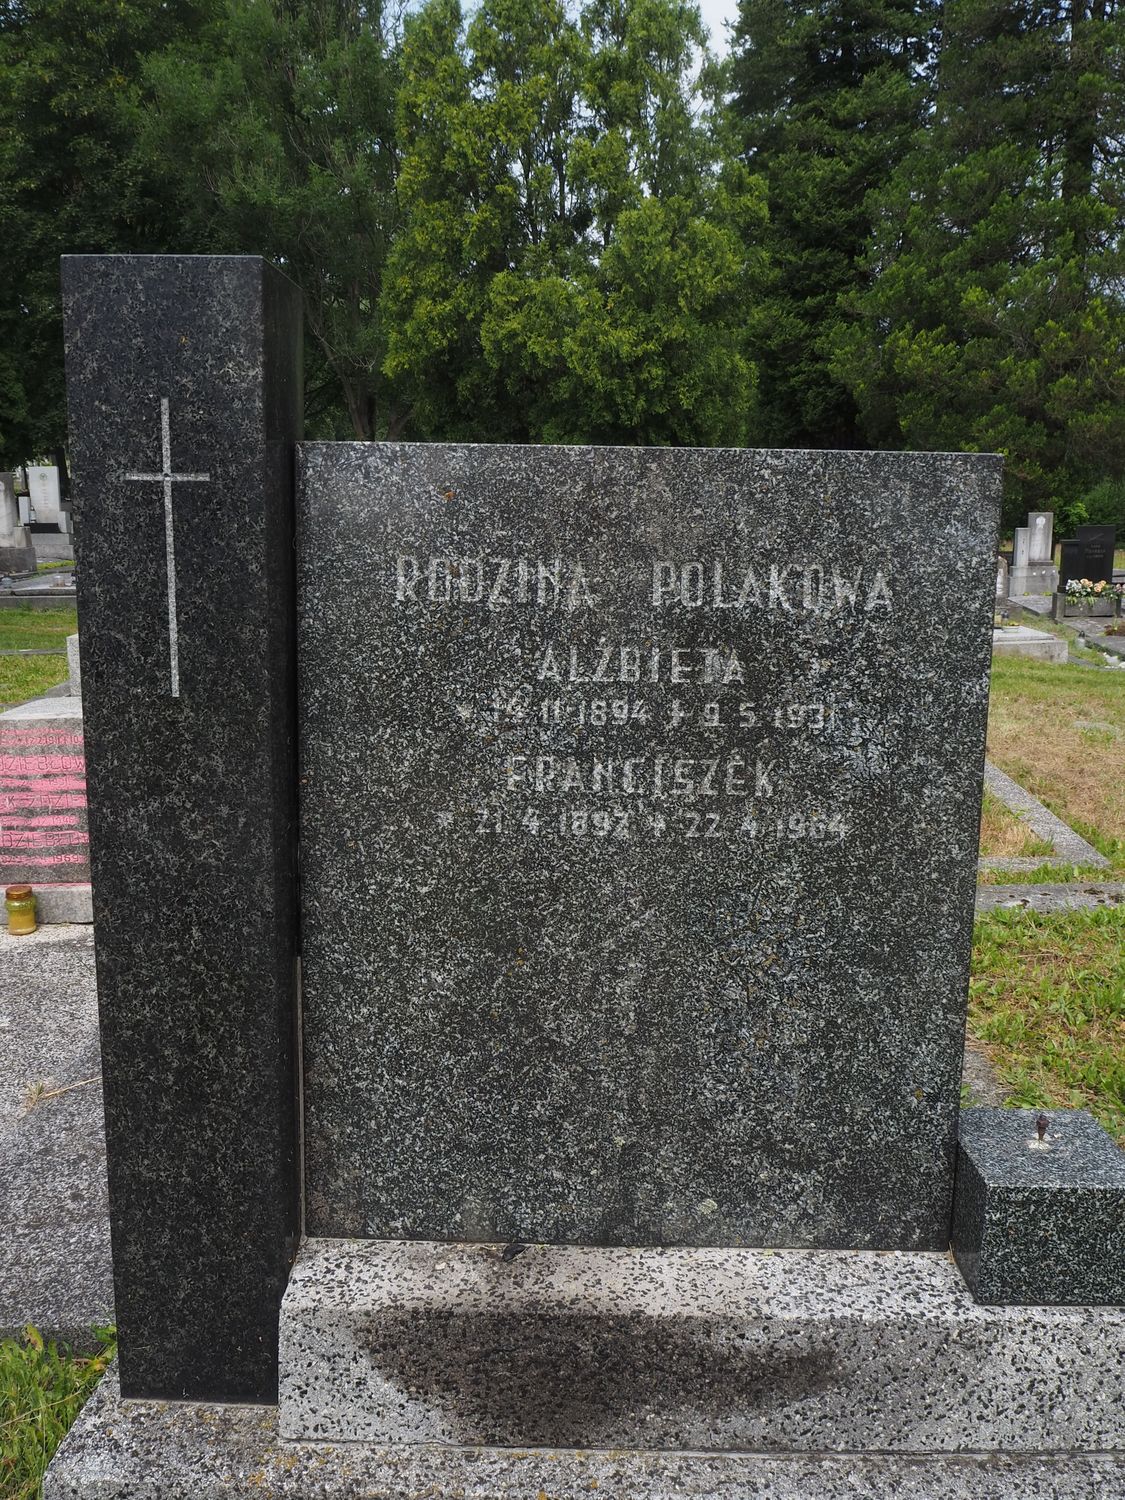 Fragment of a tombstone of the Polakov family, Karviná-Dole cemetery, as of 2022.